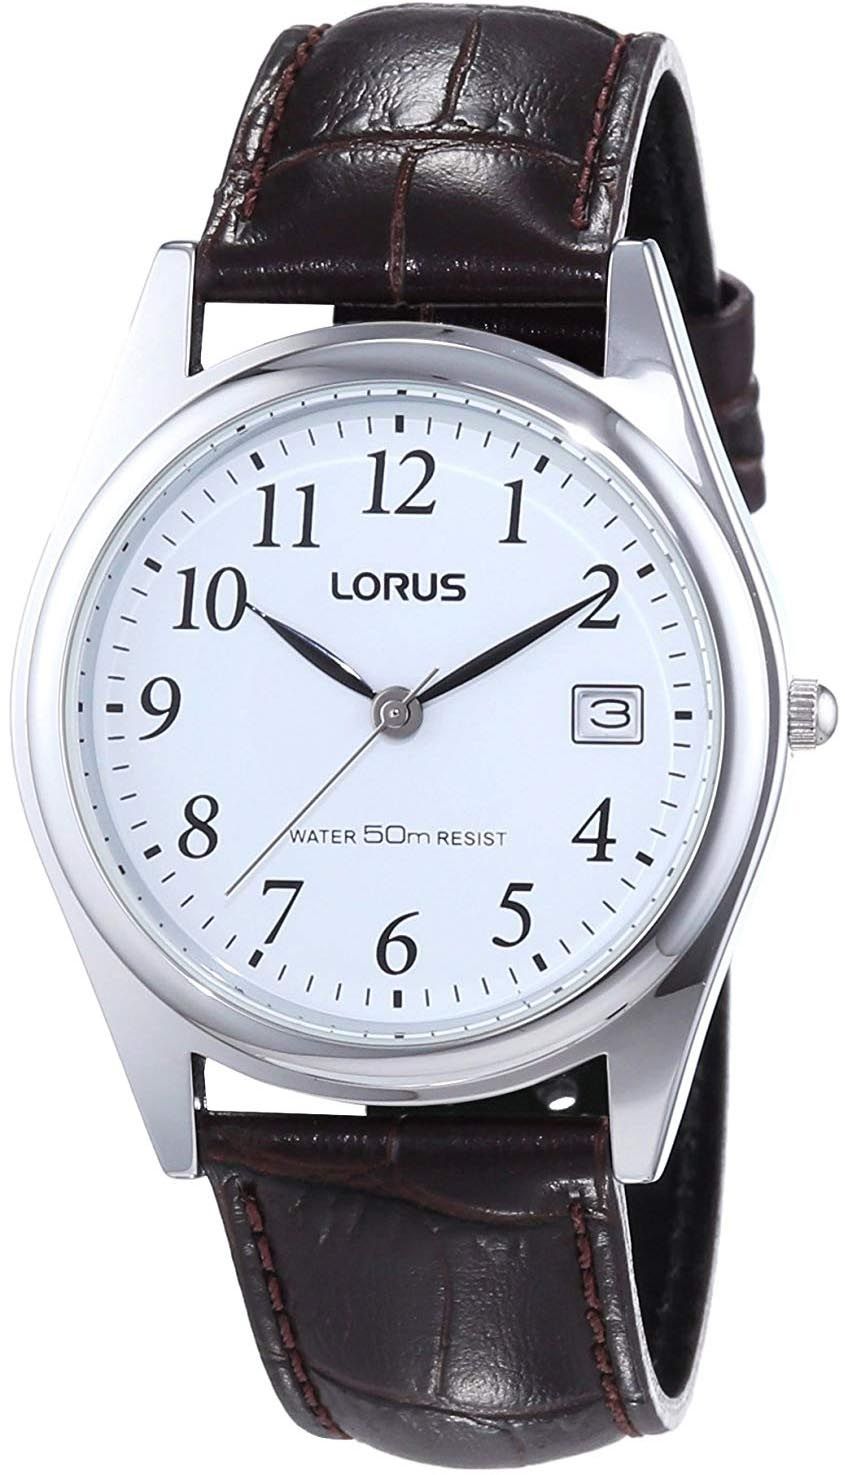 Lorus Watch RS965BX-9 - RIP